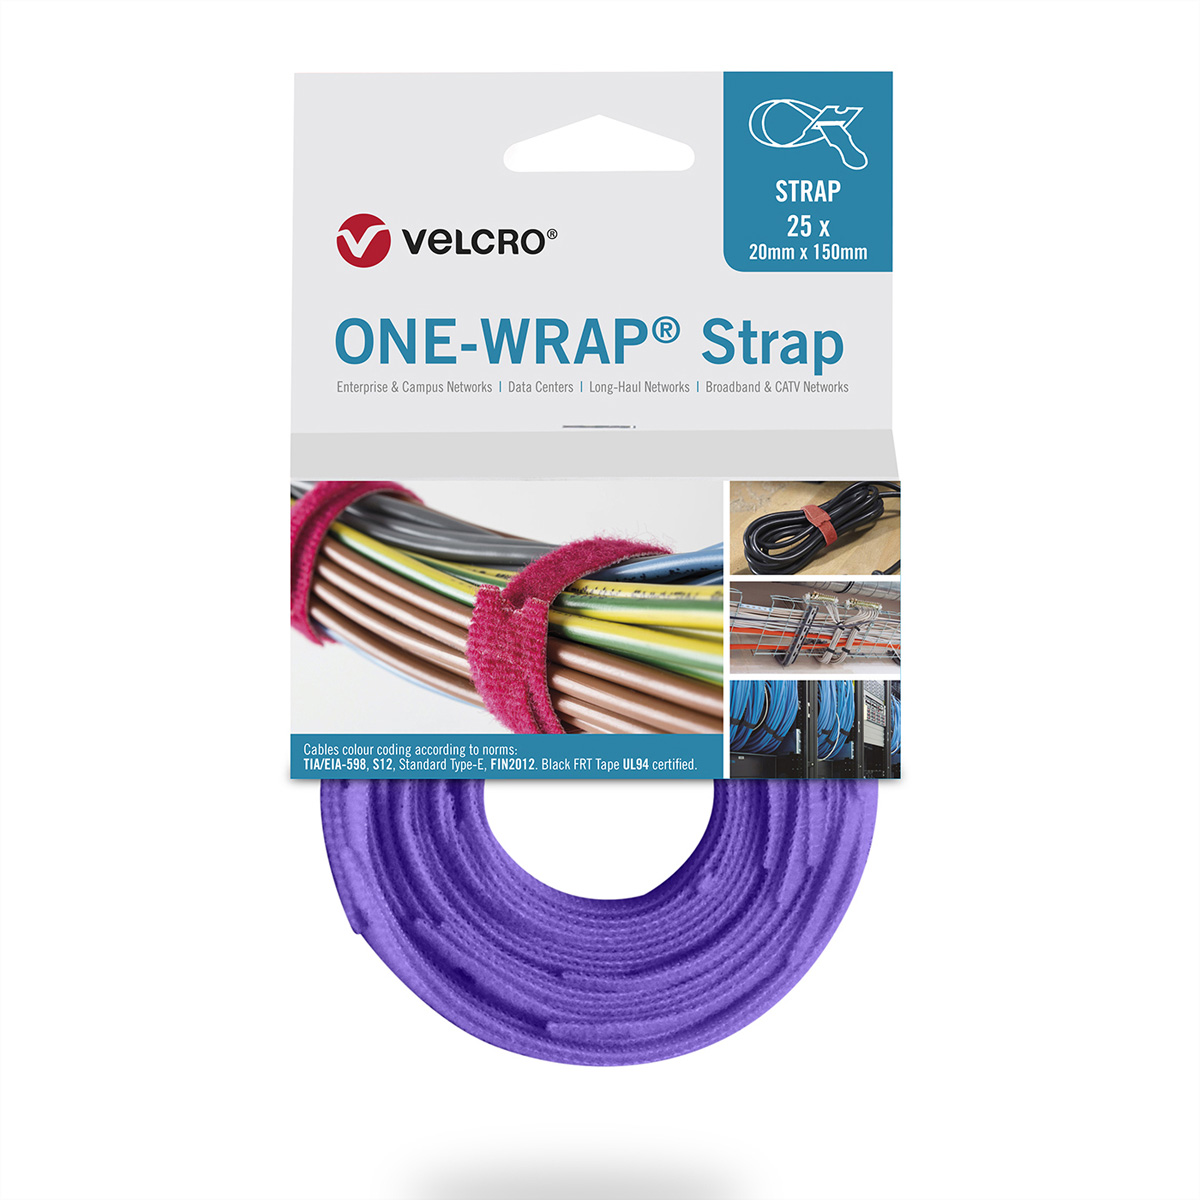 VELCRO® One Wrap® Strap 20mm x 150mm, 25 Stück, violett